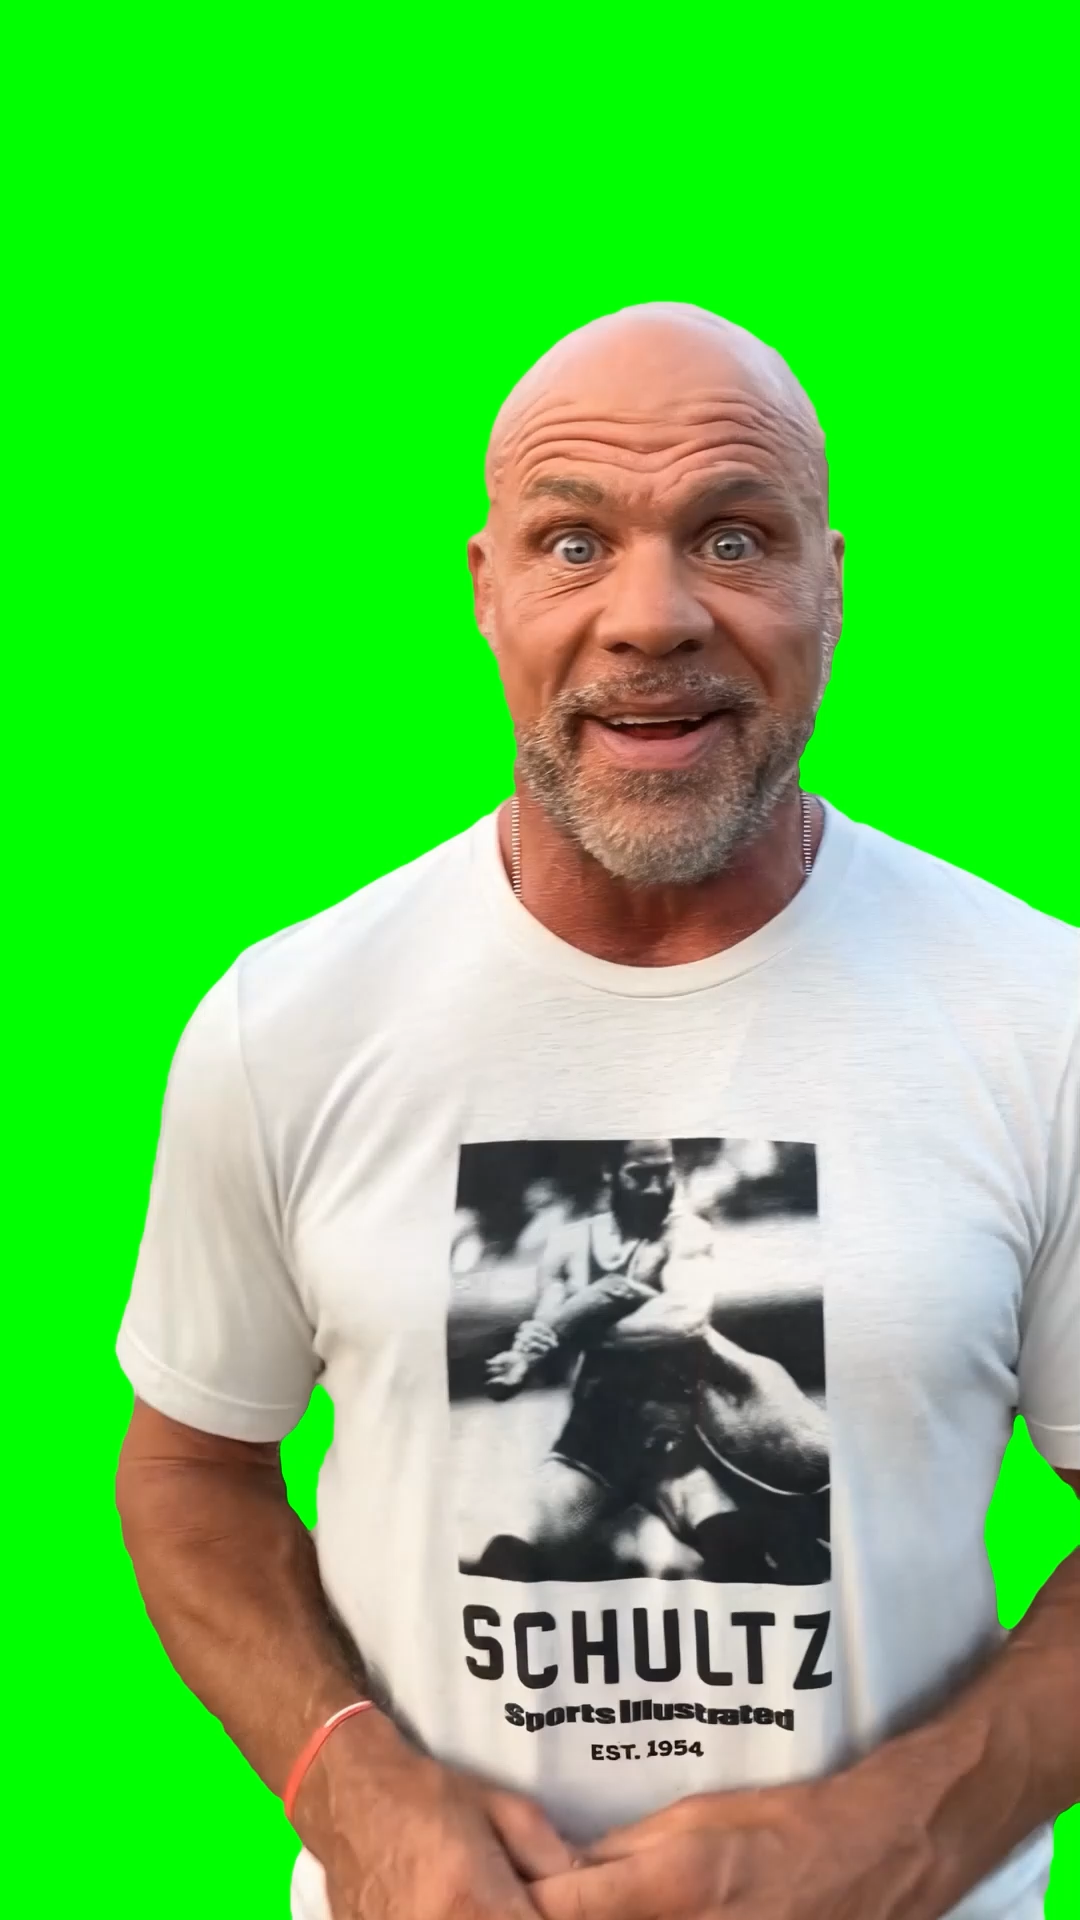 Kurt Angle Thousand Yard Stare - Bald bearded staring guy TikTok meme (Green Screen)